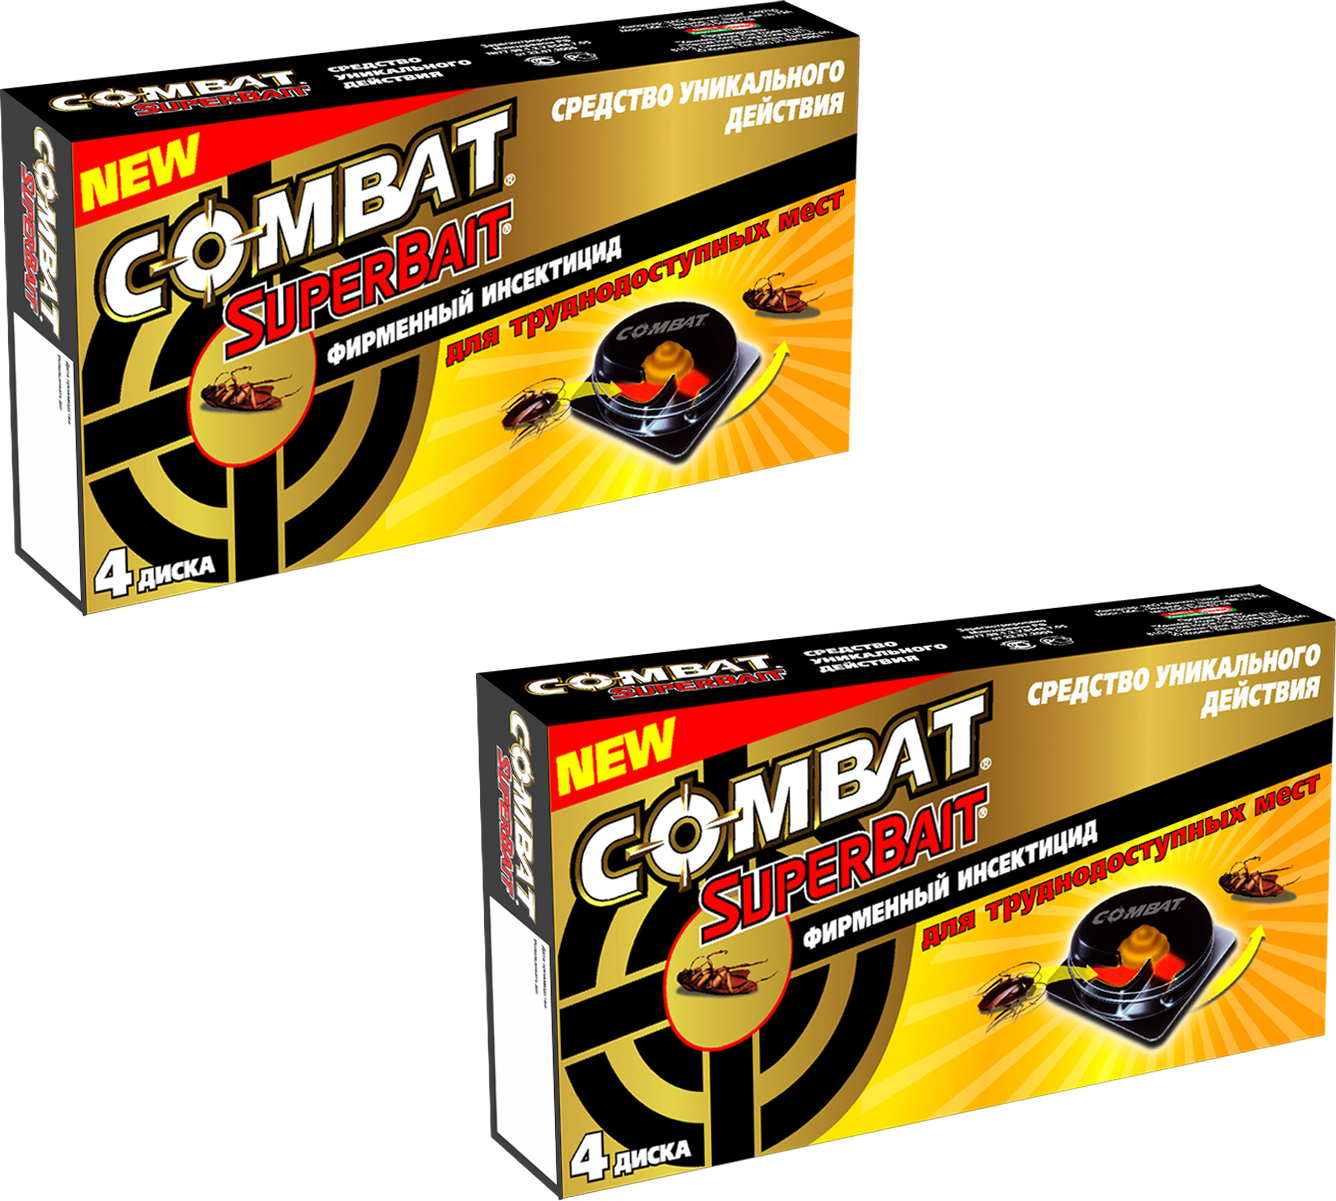 Combat Super Bait Диски от тараканов 4 штуки, 2 упаковке в комплекте.